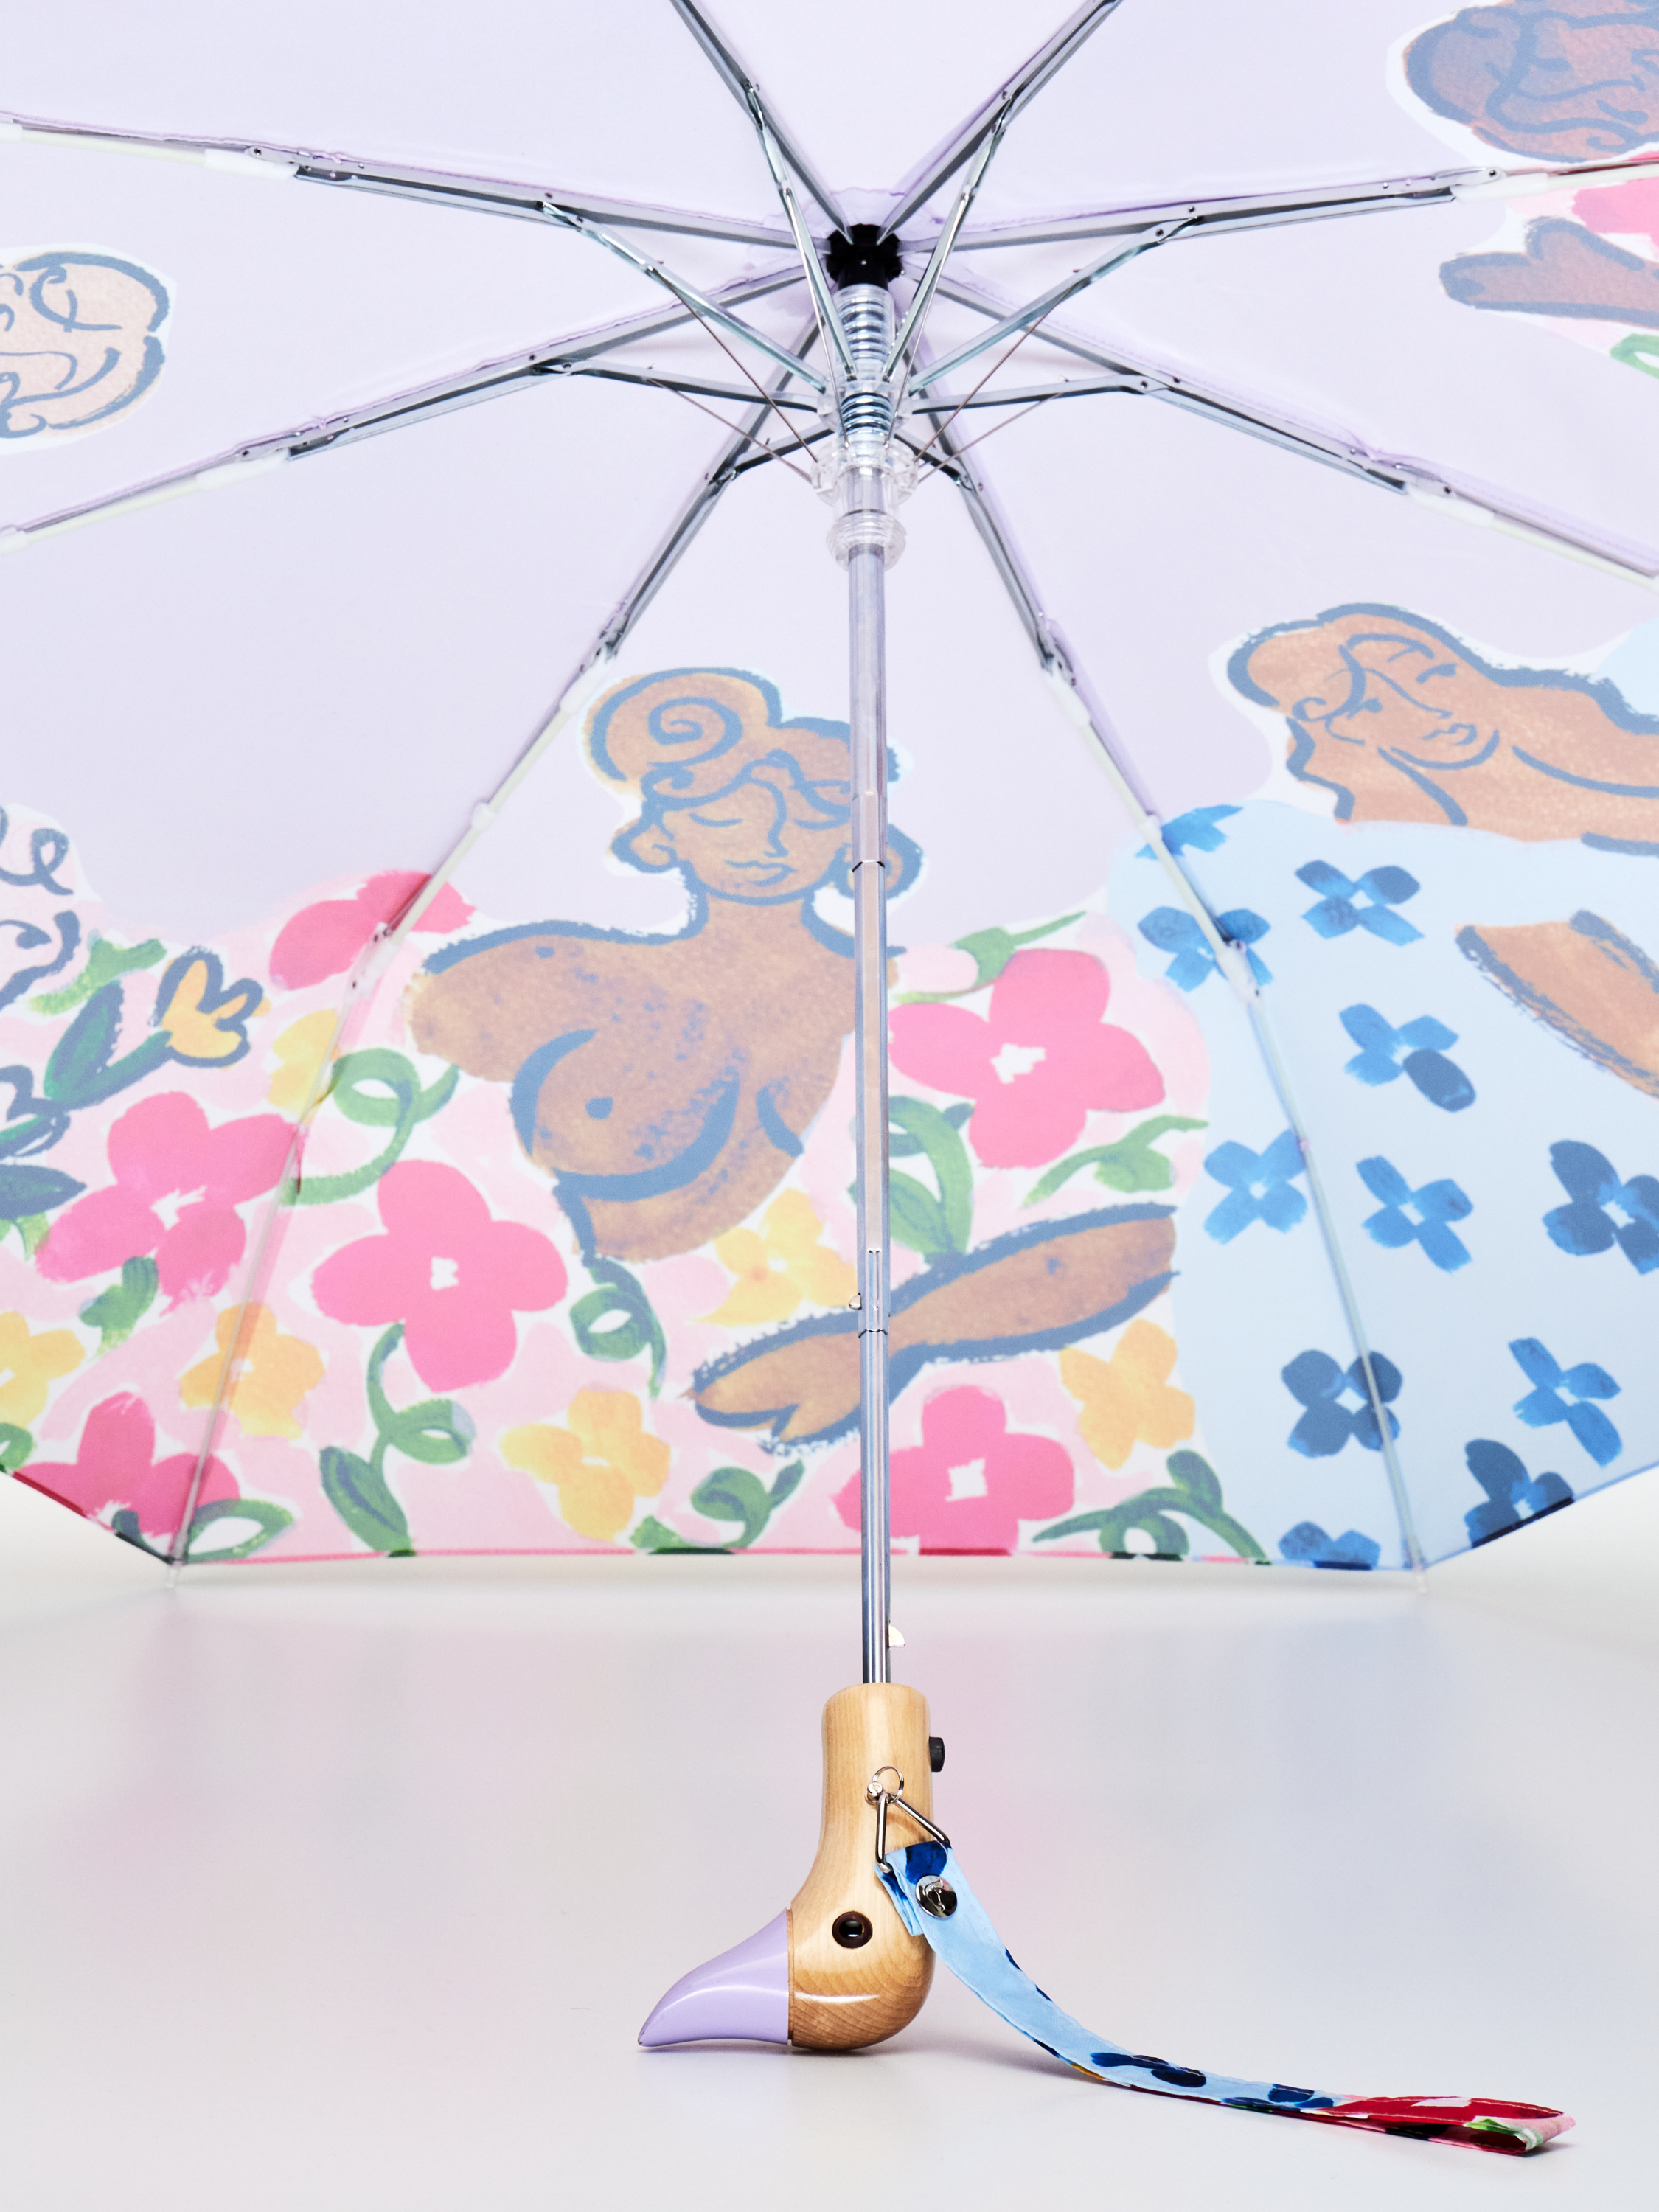 Heaven's Garden Eco-Friendly Umbrella.